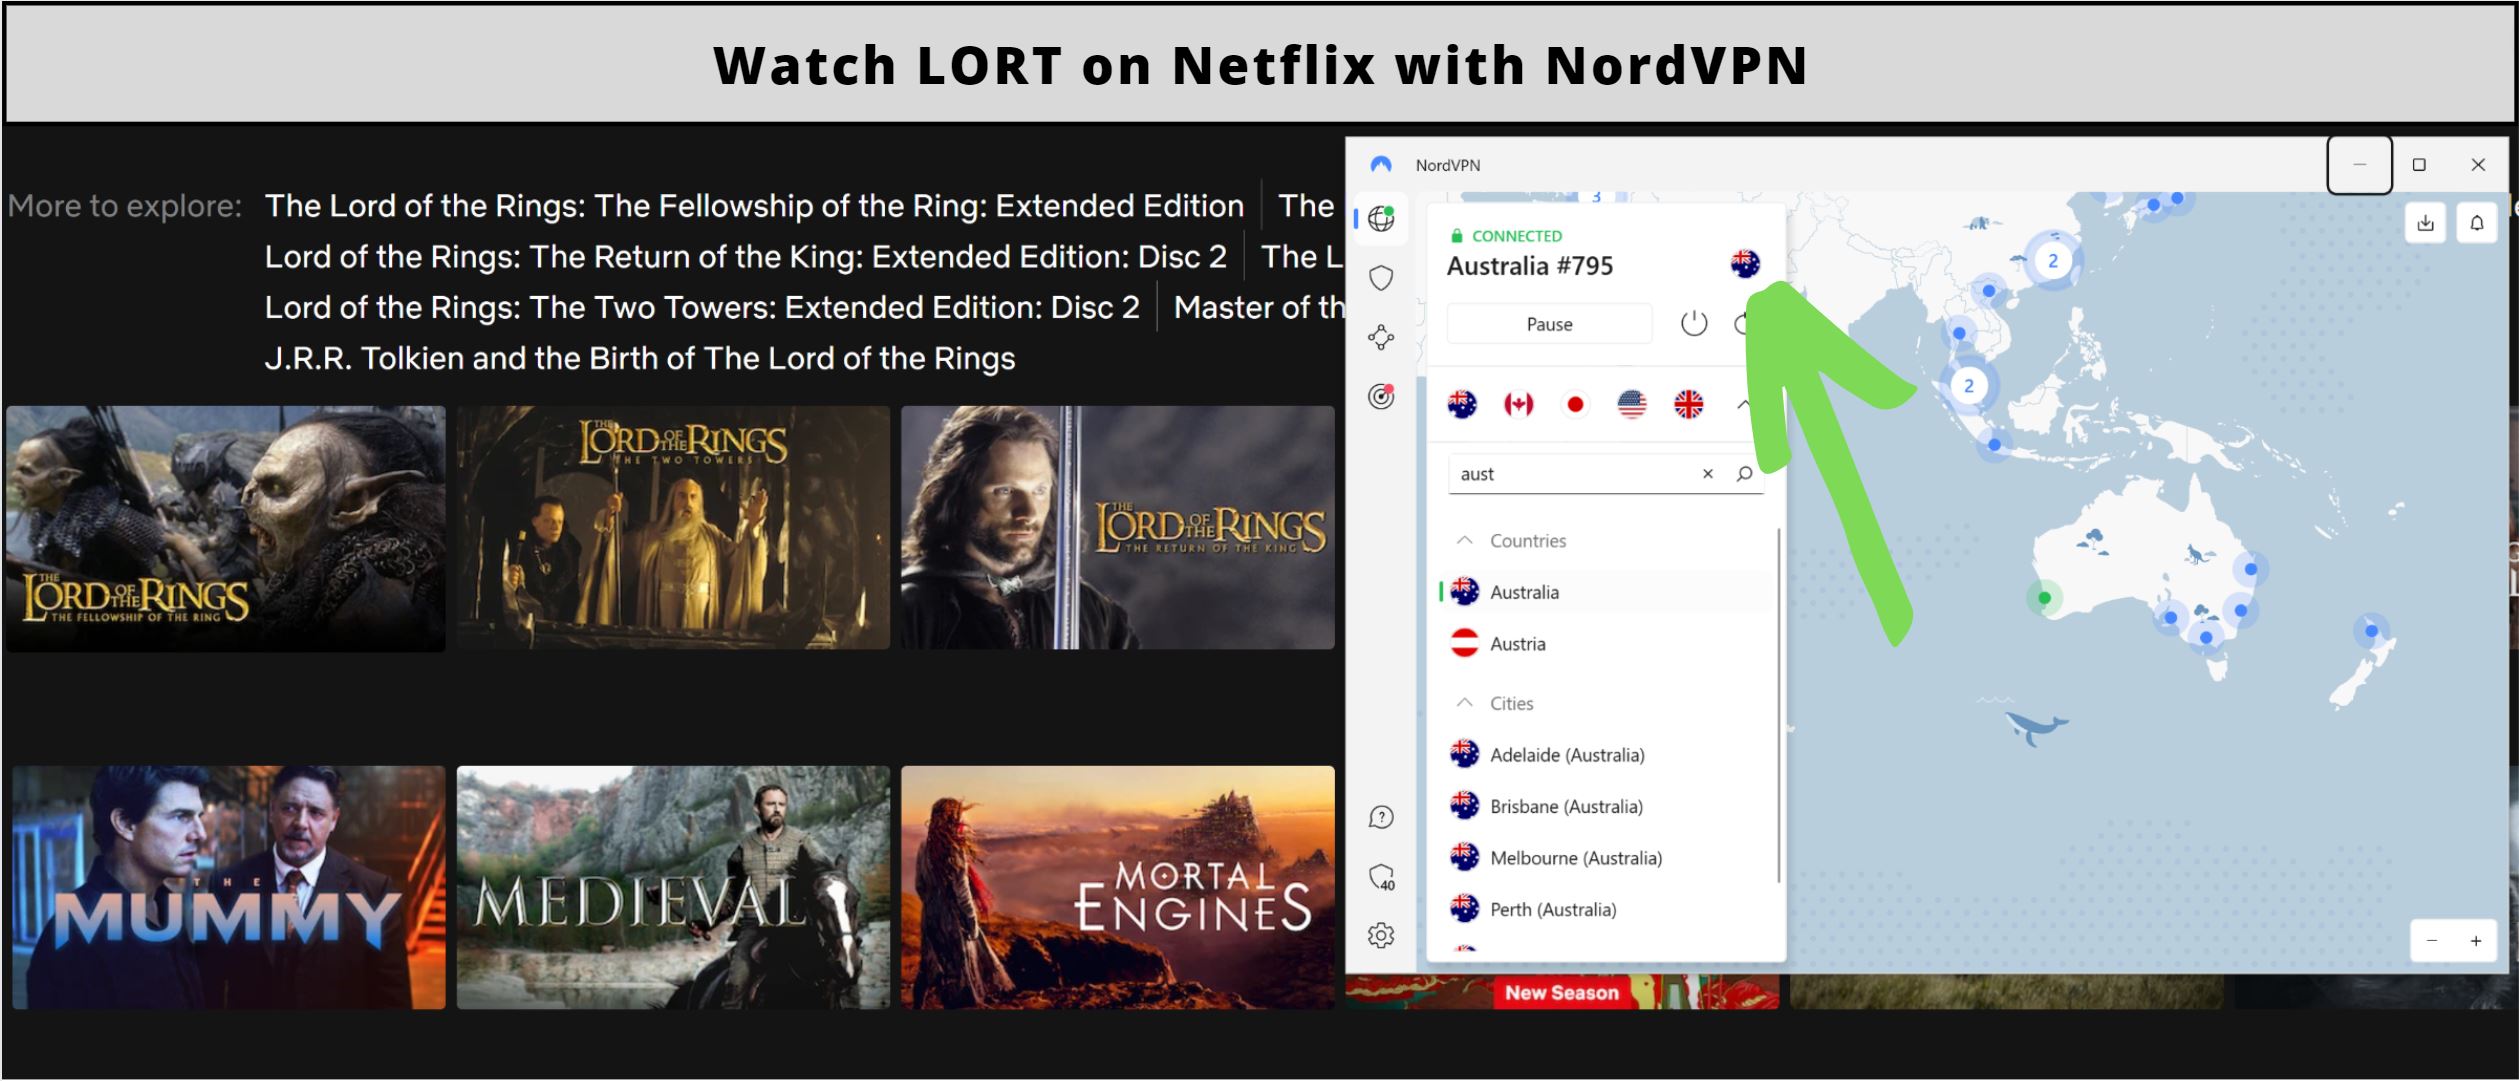 Watching LORT on Netflix with NordVPN